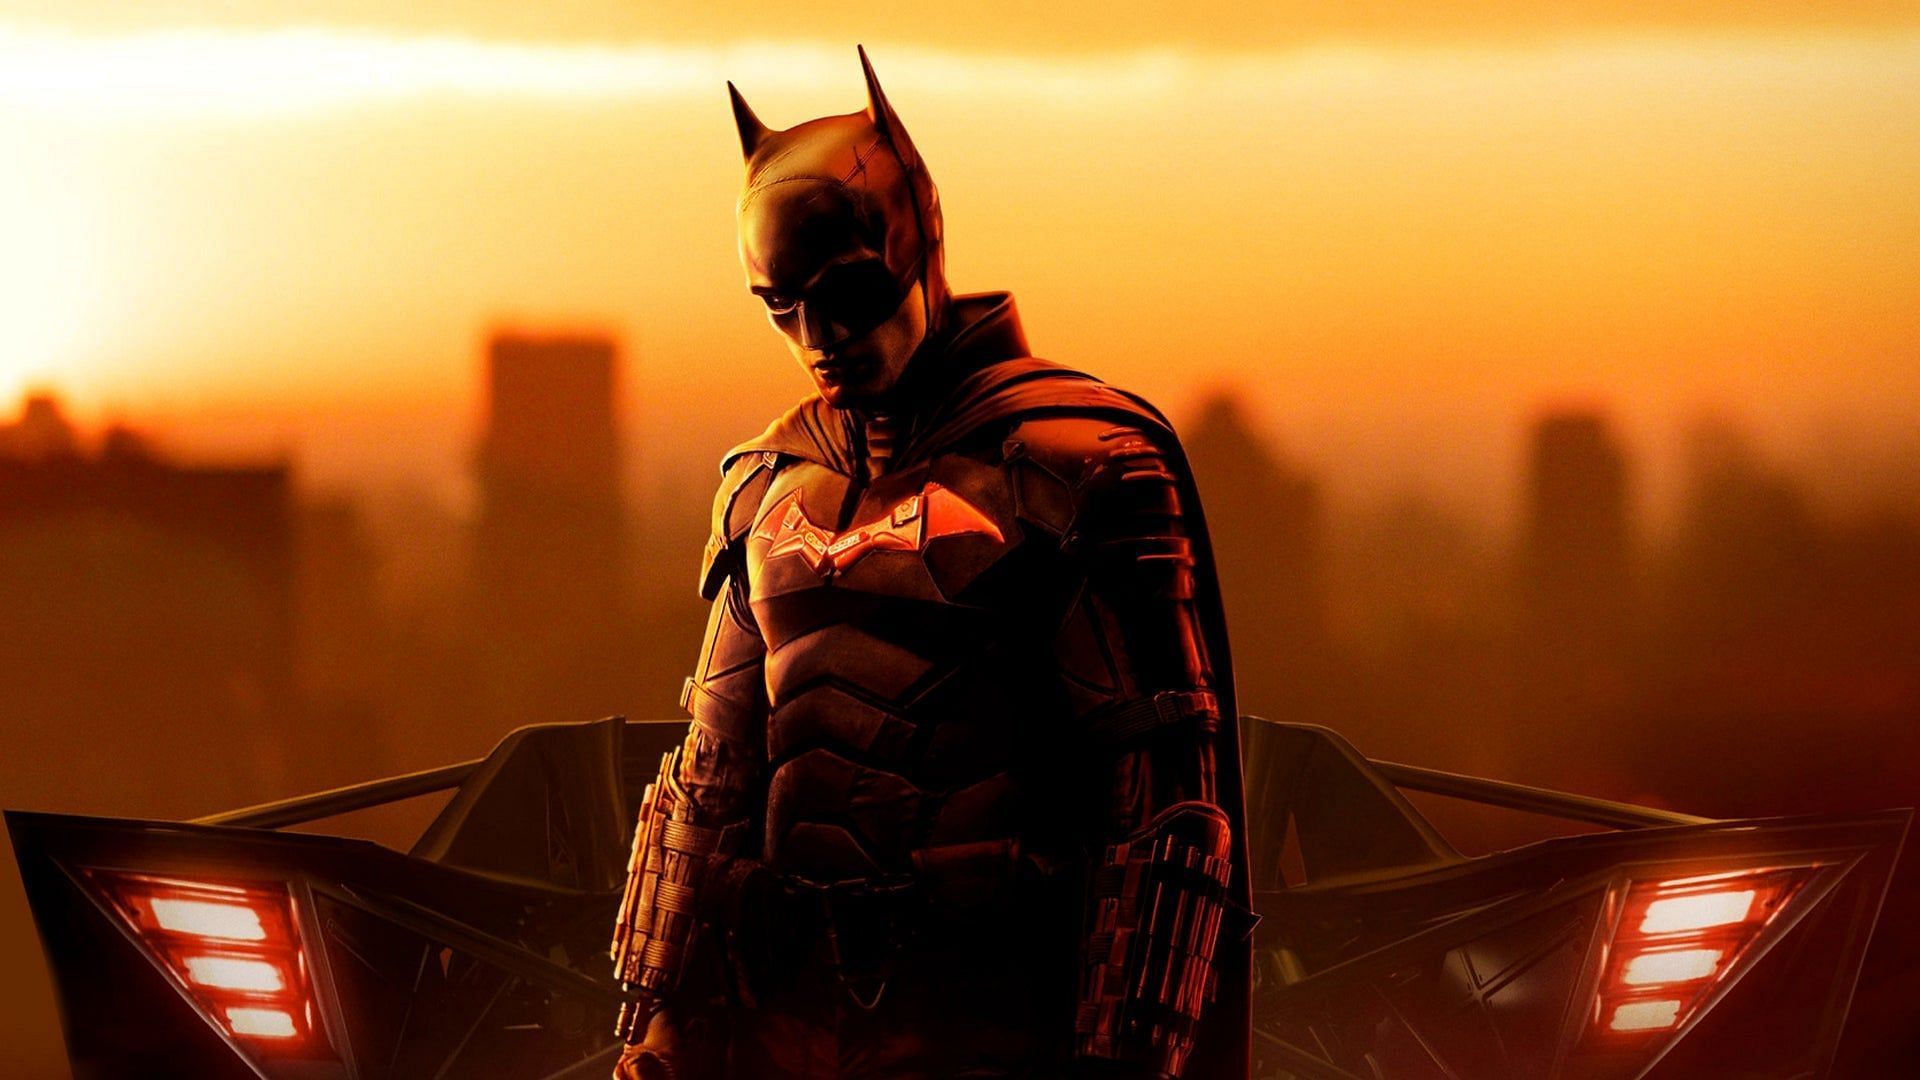 The Batman 2 villain revealed (Image via DC)